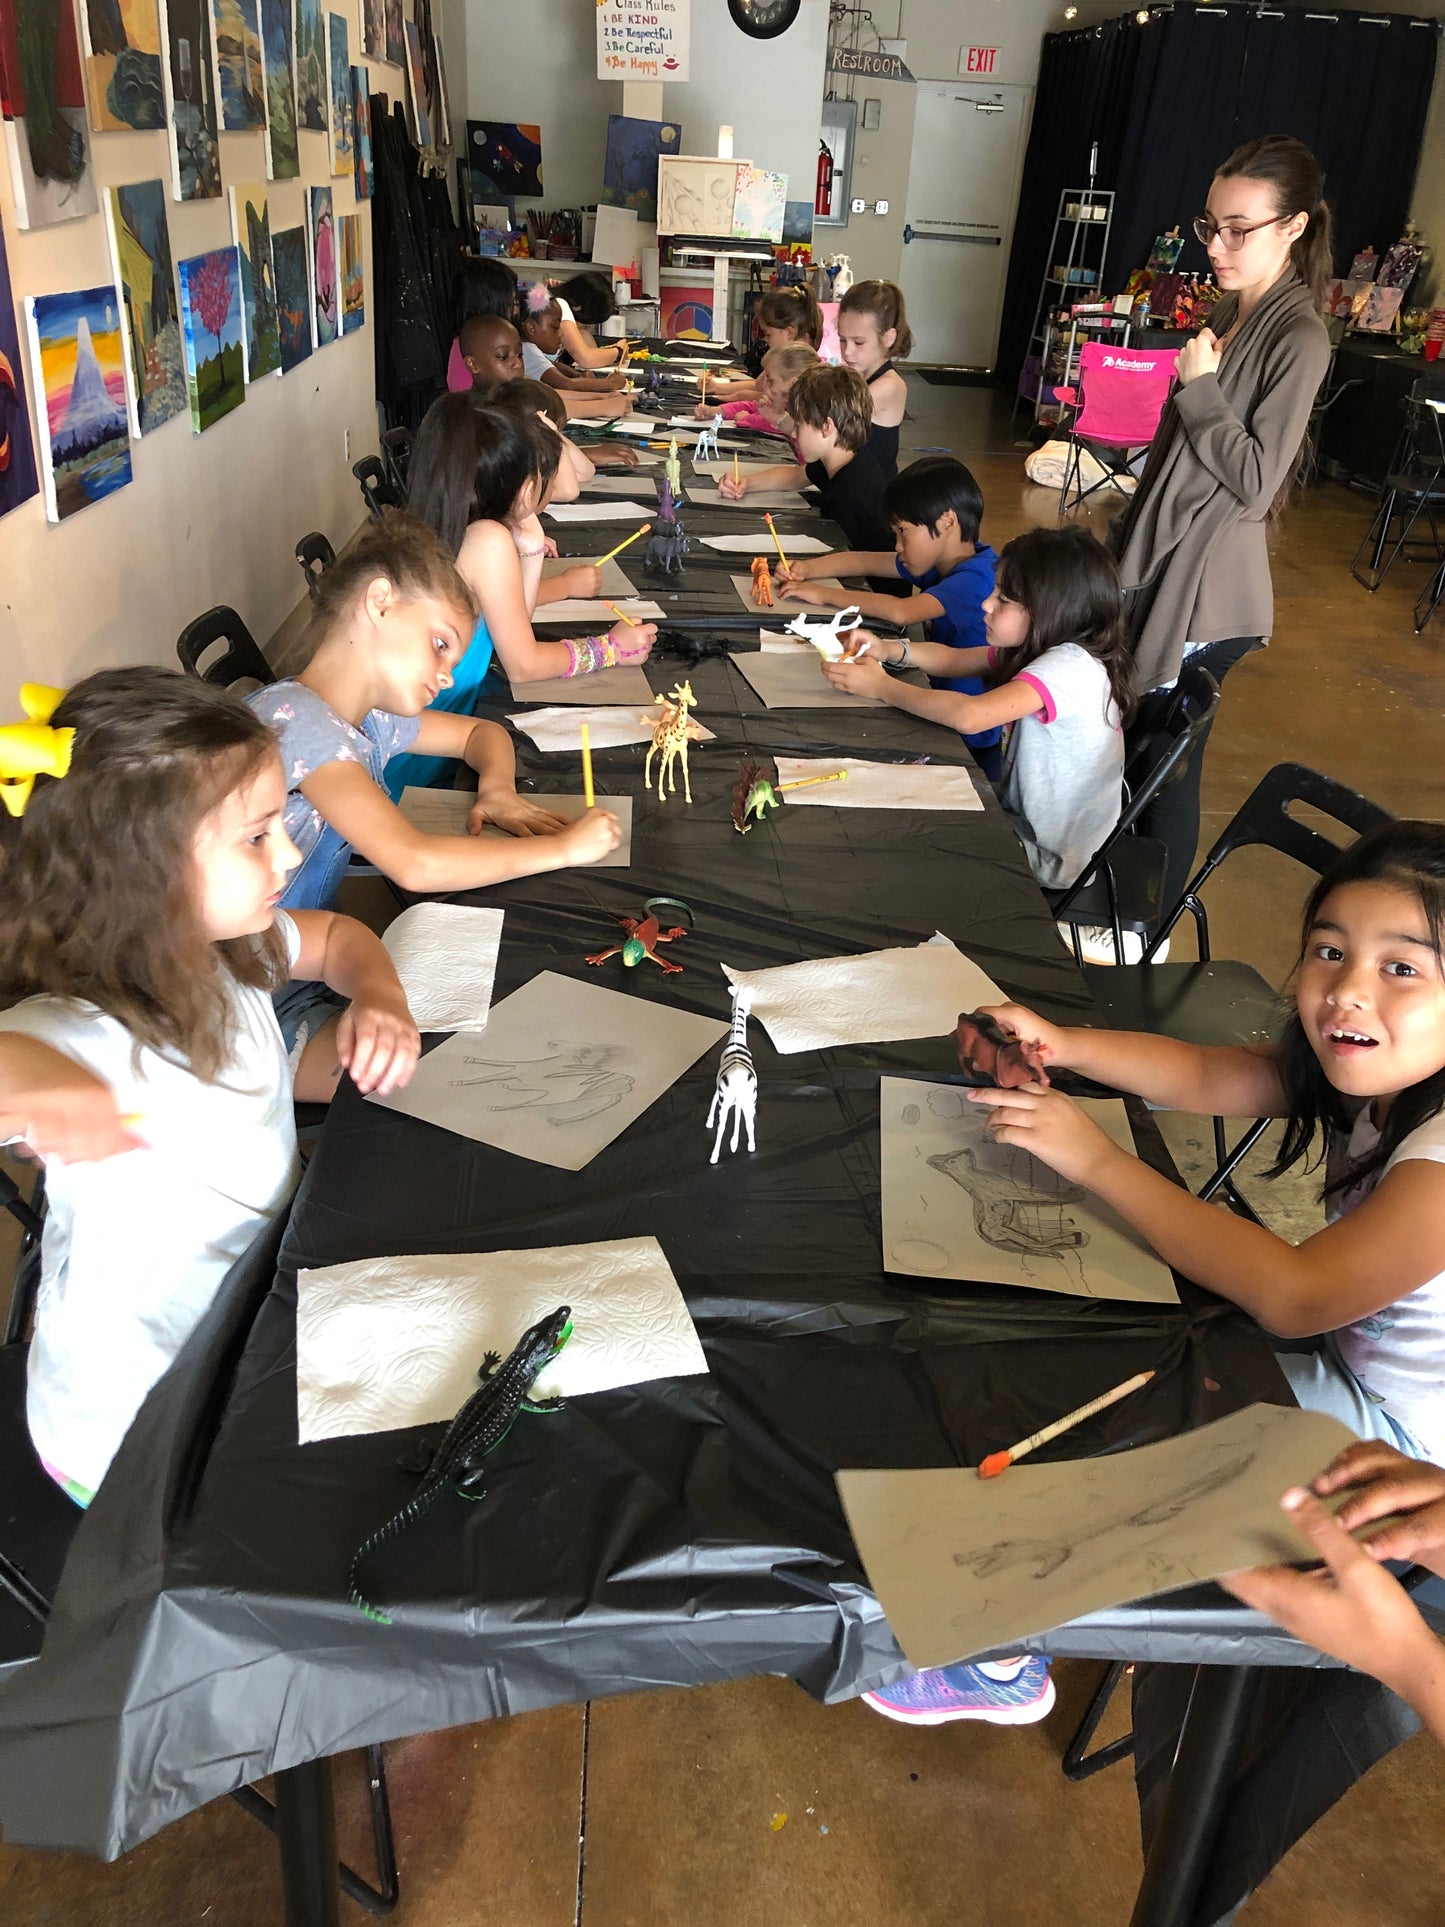 Wed, Sep 20th, 4-6P “Sketch Basics” Public Houston Kids Art Class